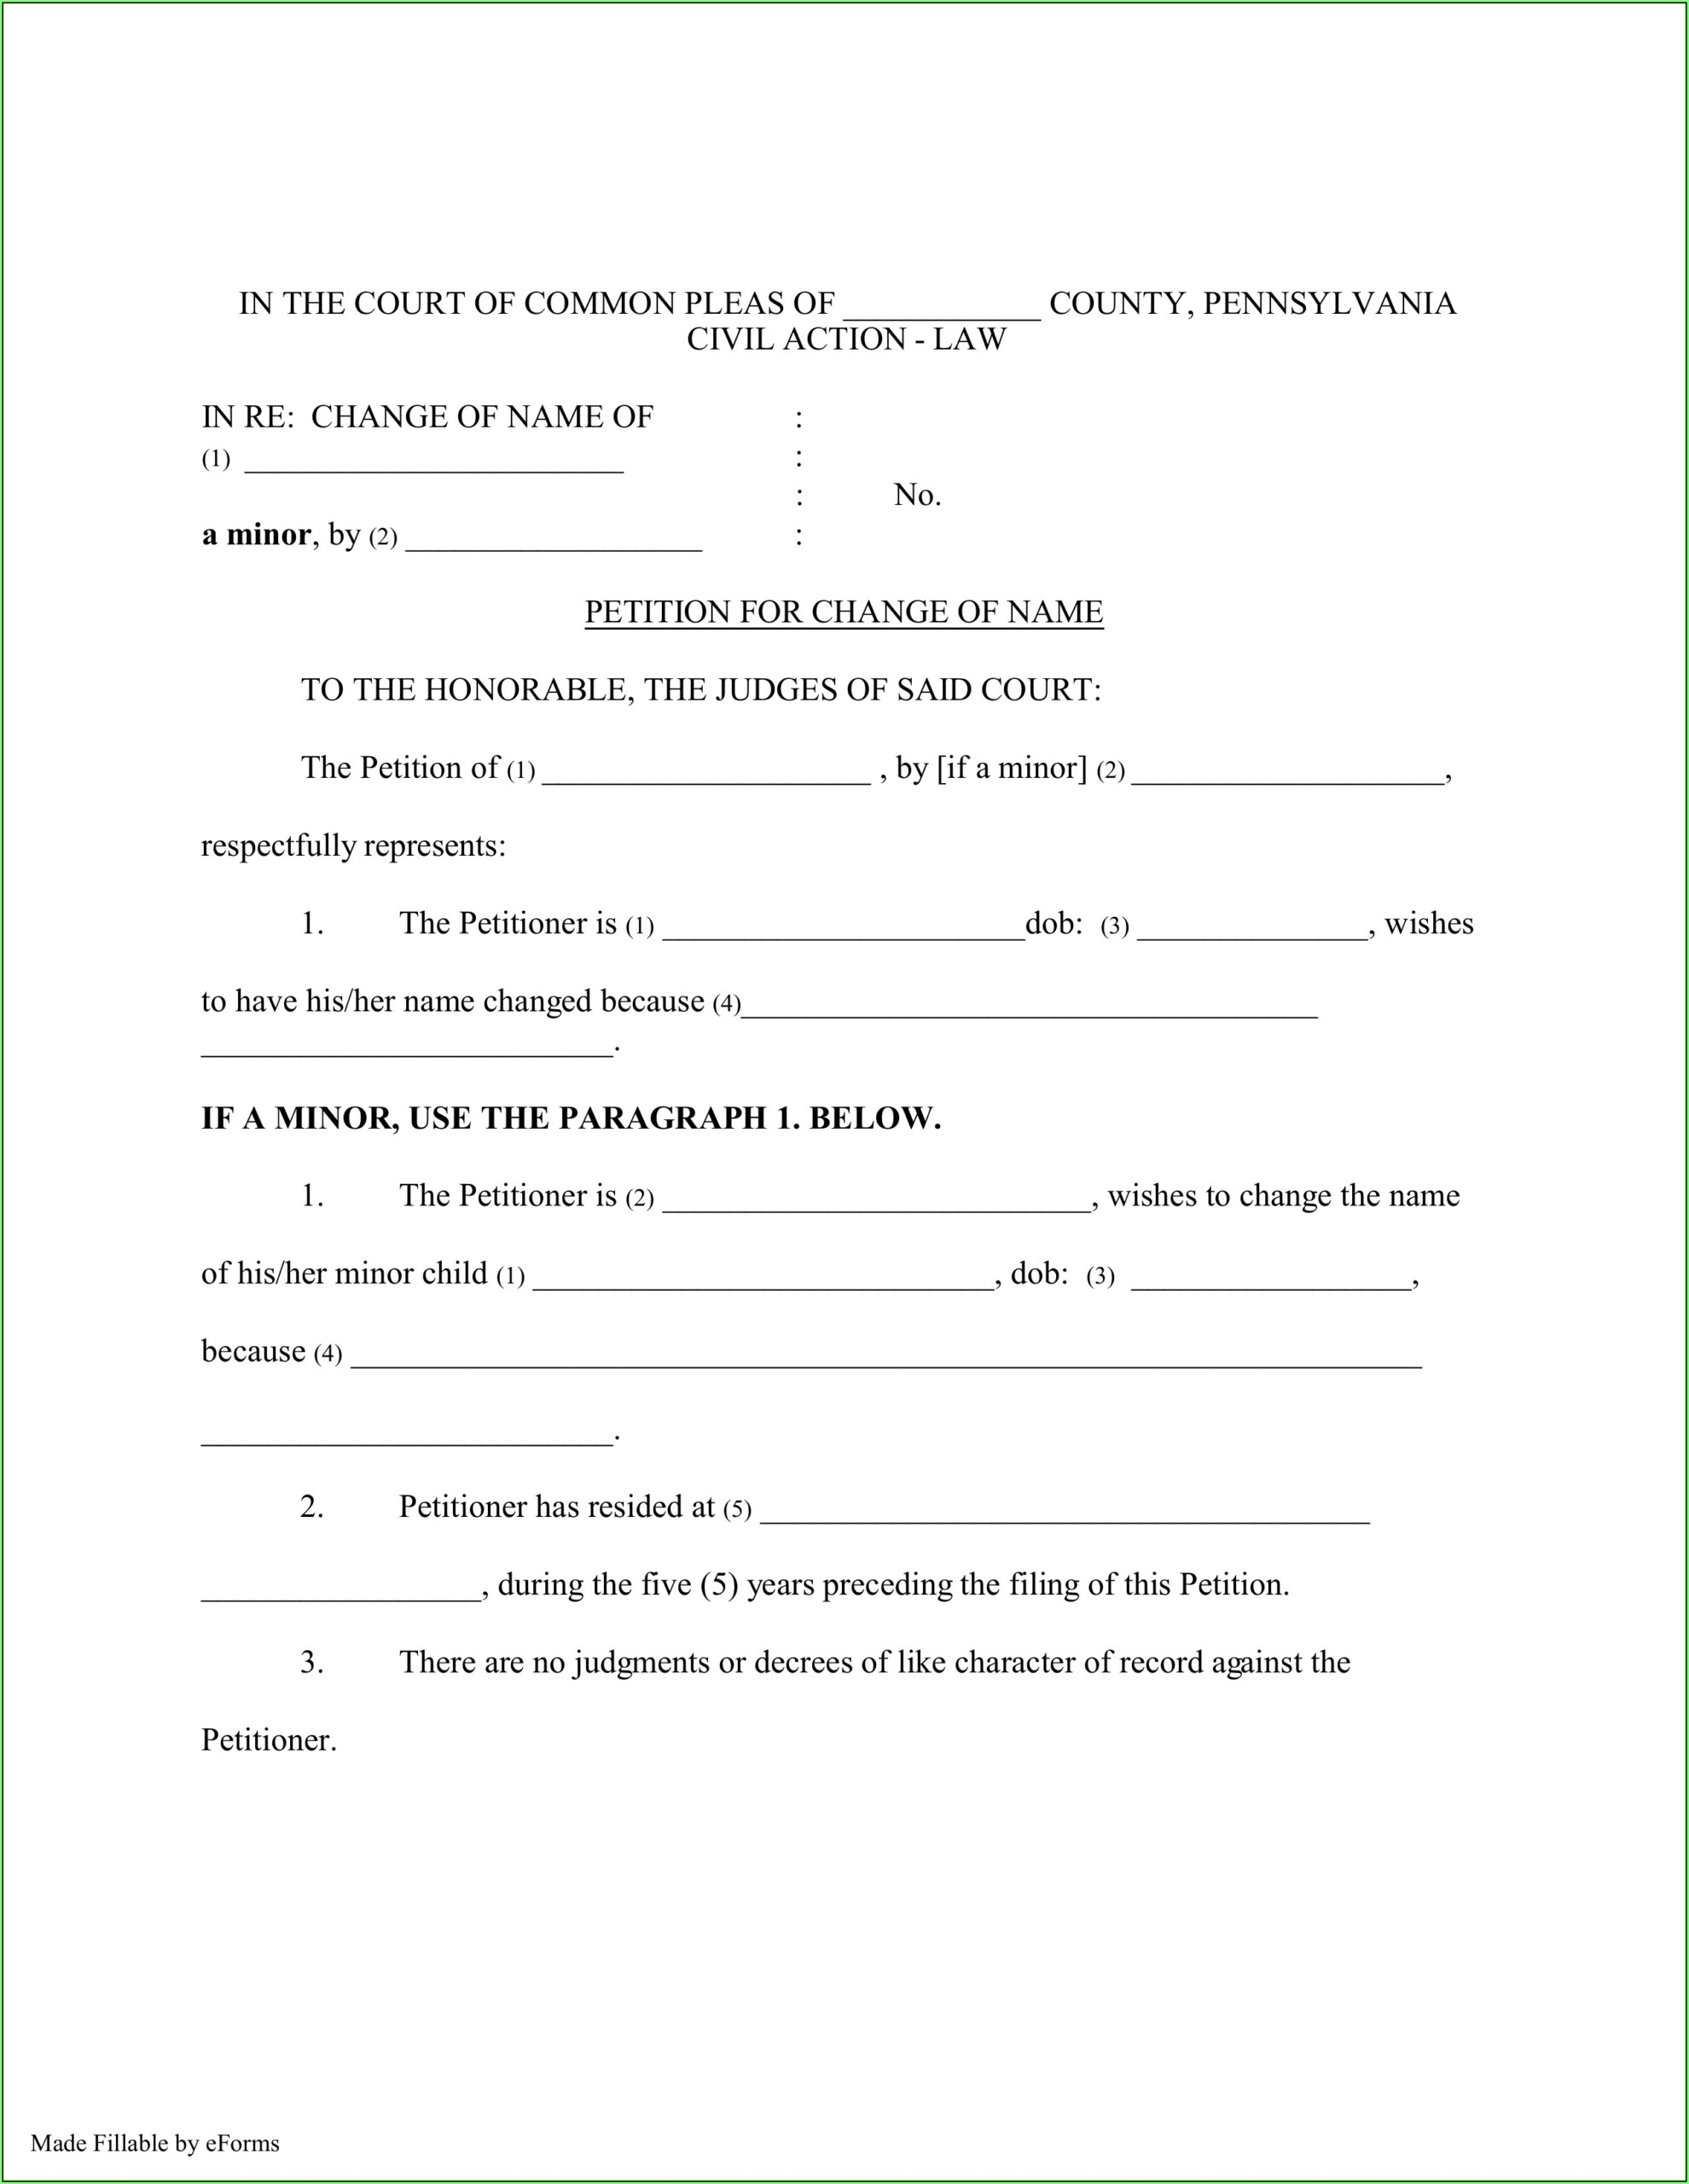 Nj Municipal Court Expungement Forms Form Resume Examples 9x8rZLe8dR